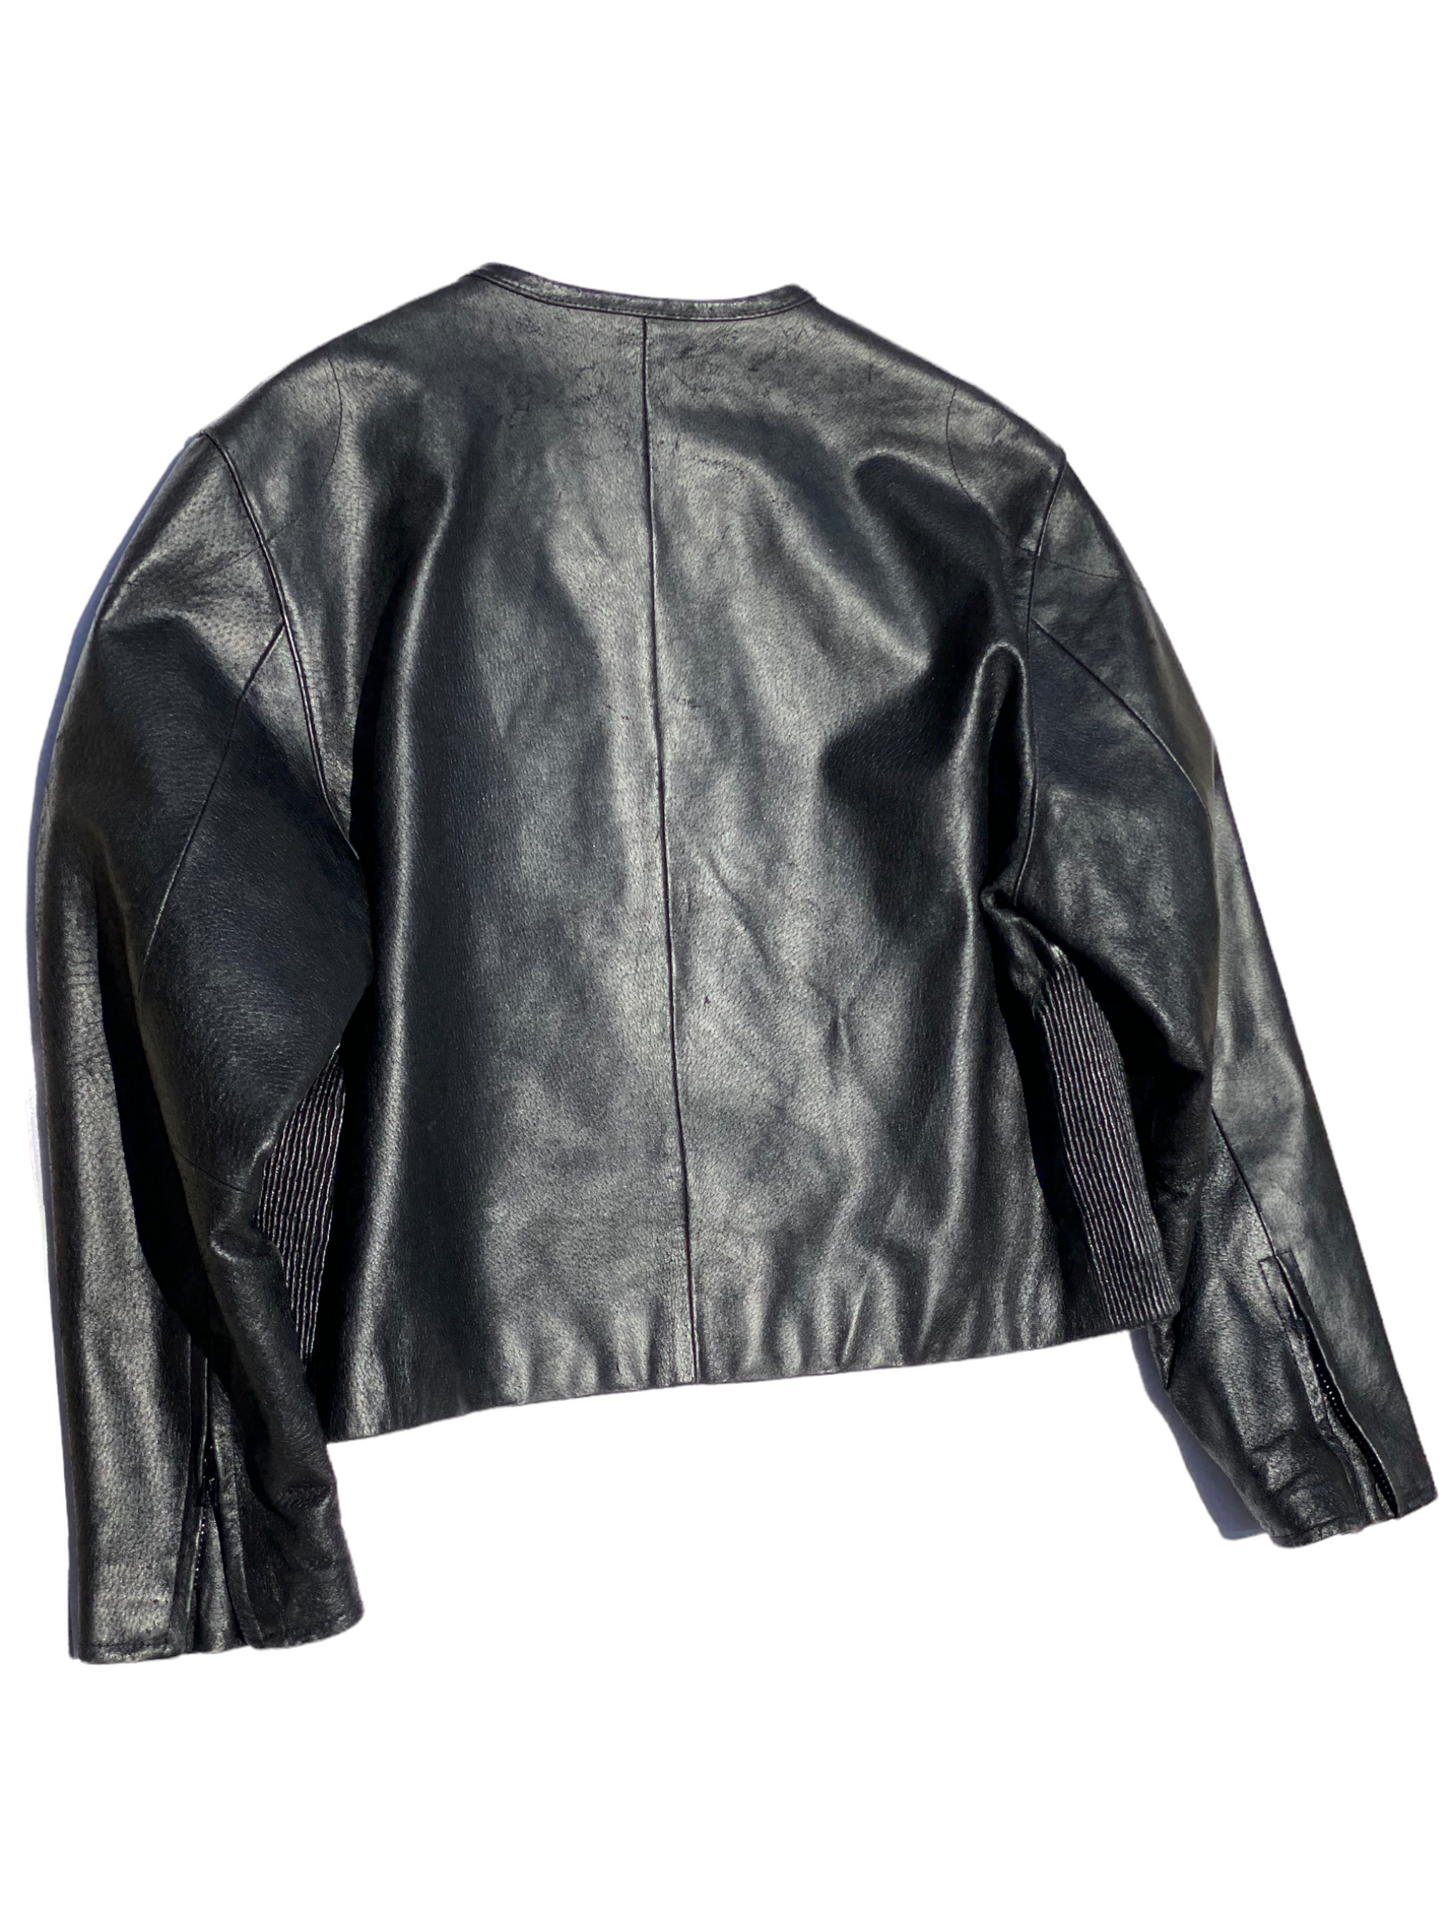 Black Leather vintage jacket